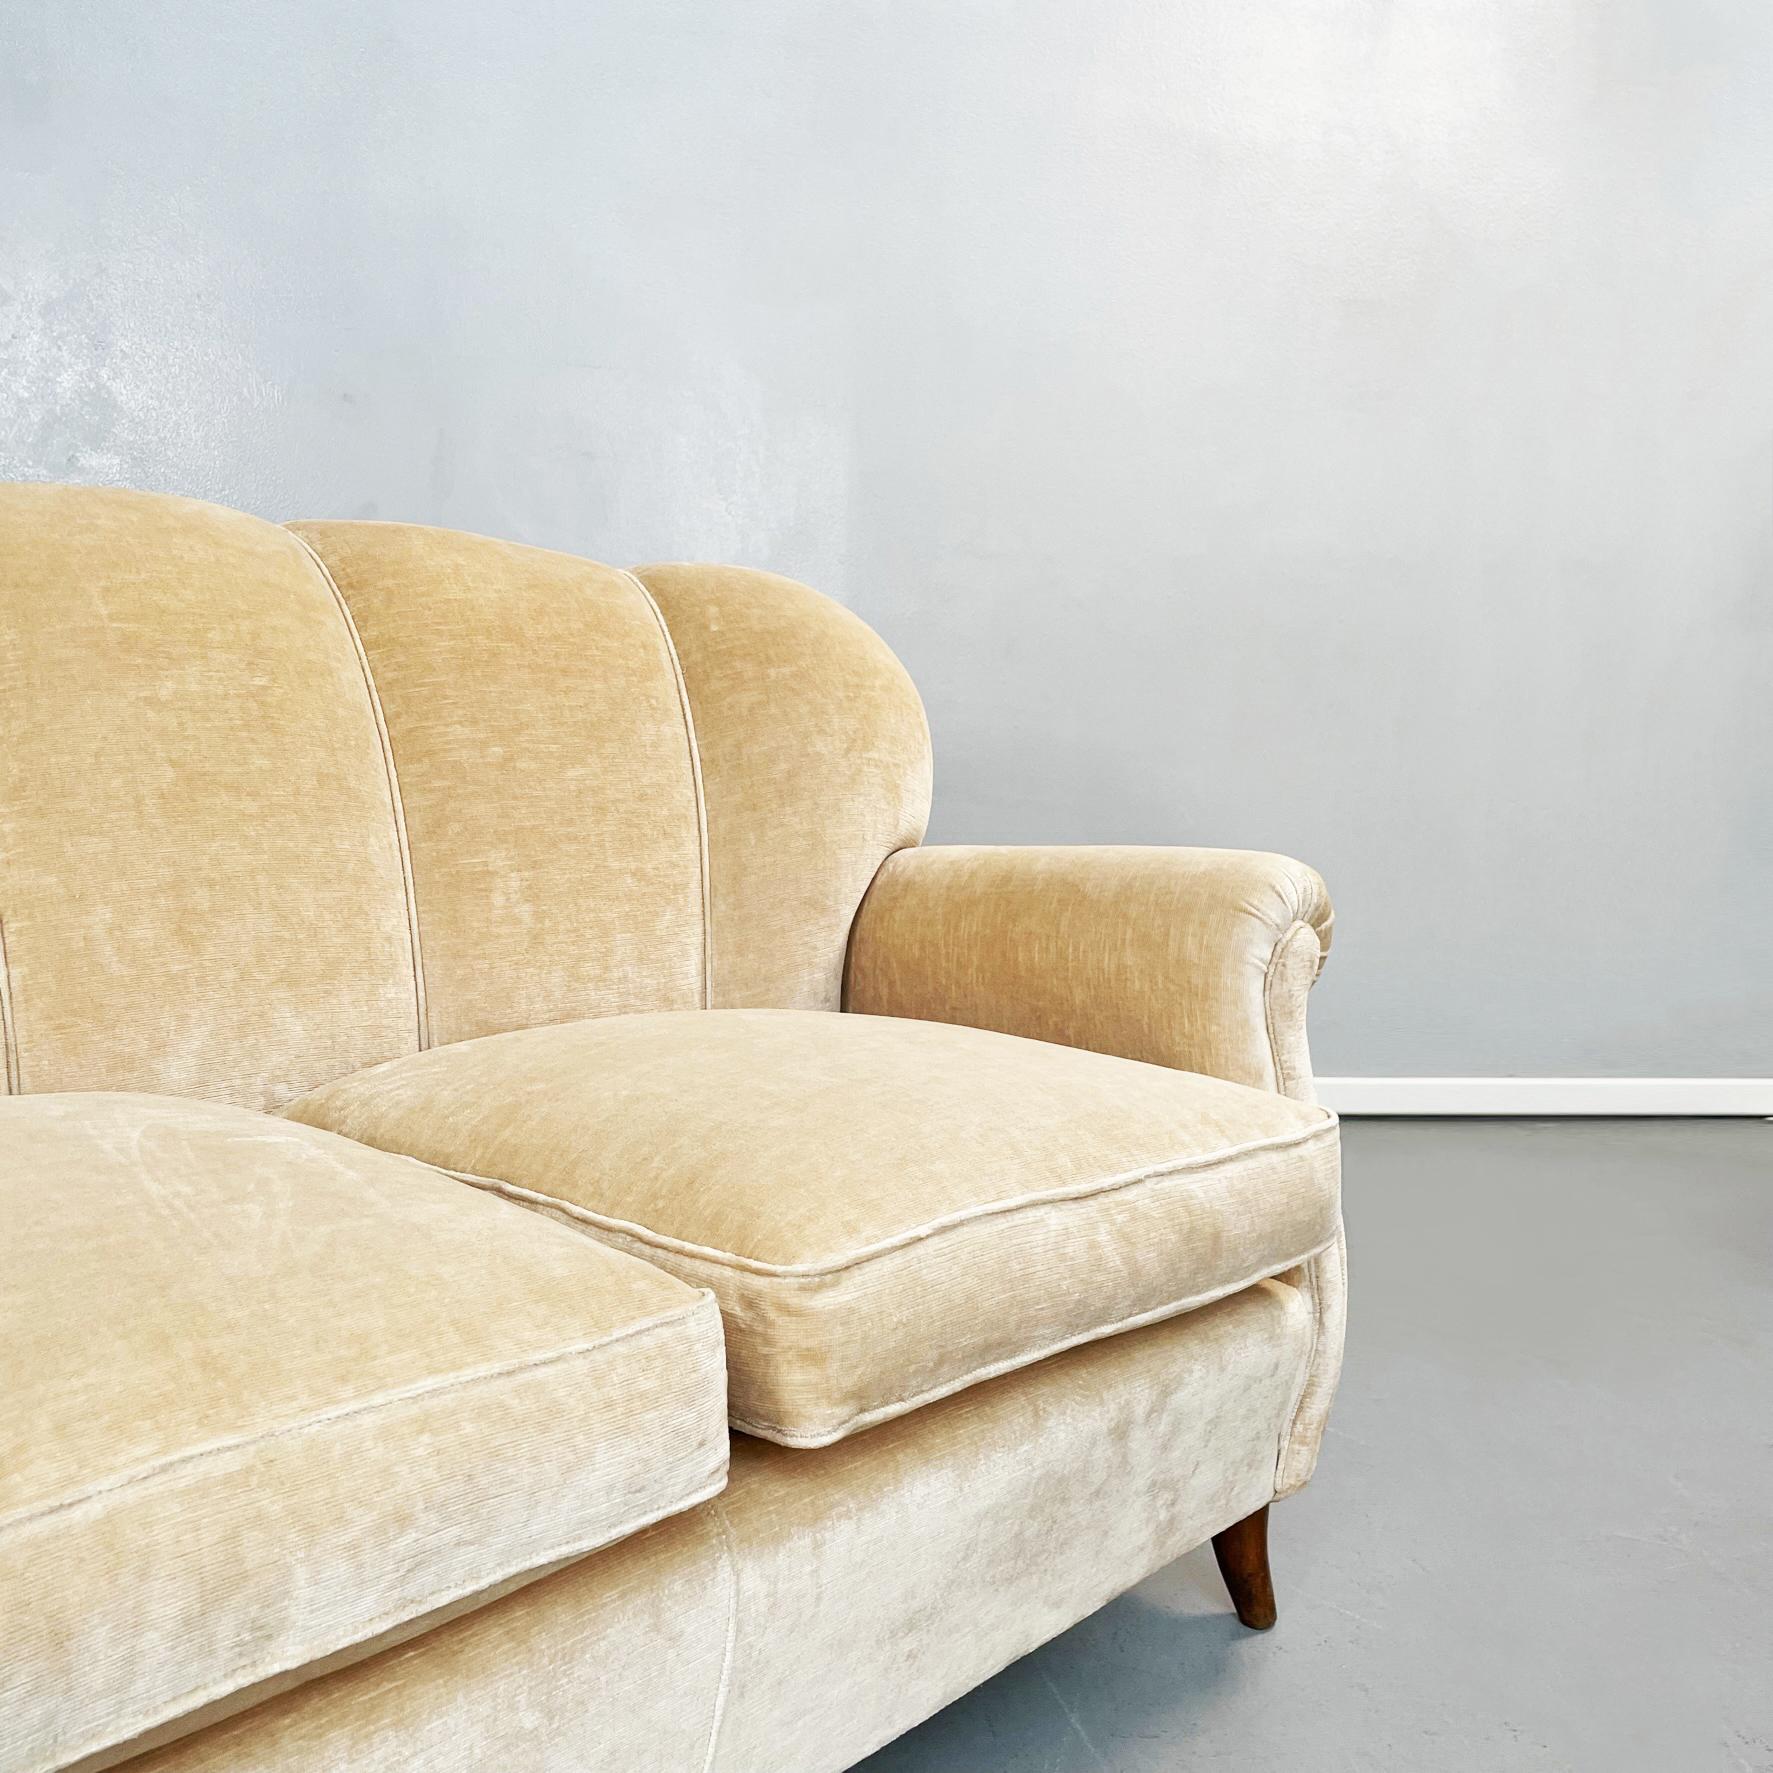 Italian Mid-Century Modern Wooden Sofa in Beige Fabric, 1960s For Sale 1